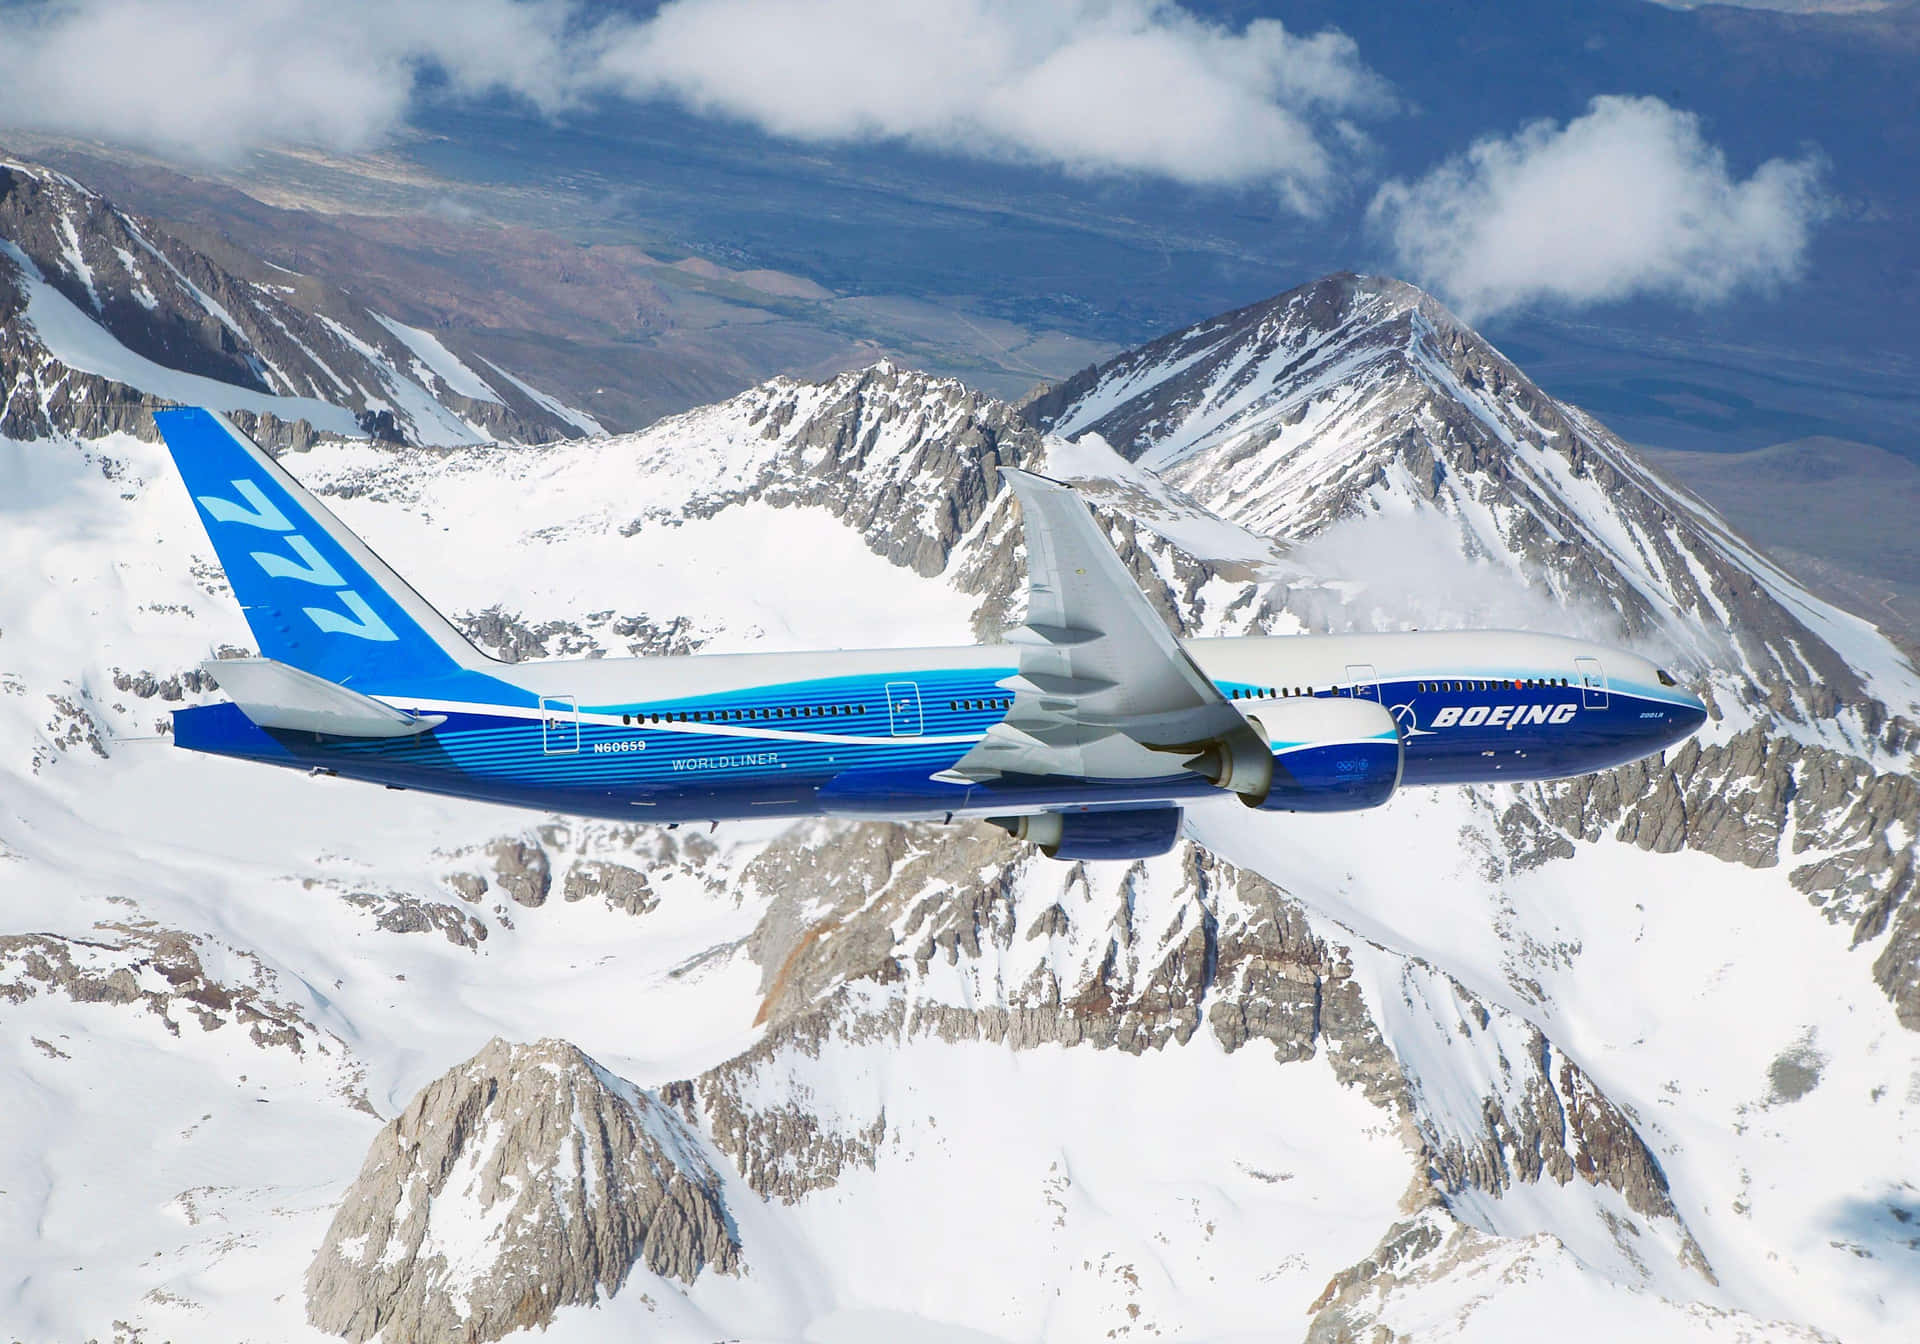 Boeing777 Over Mountain Ranges Wallpaper